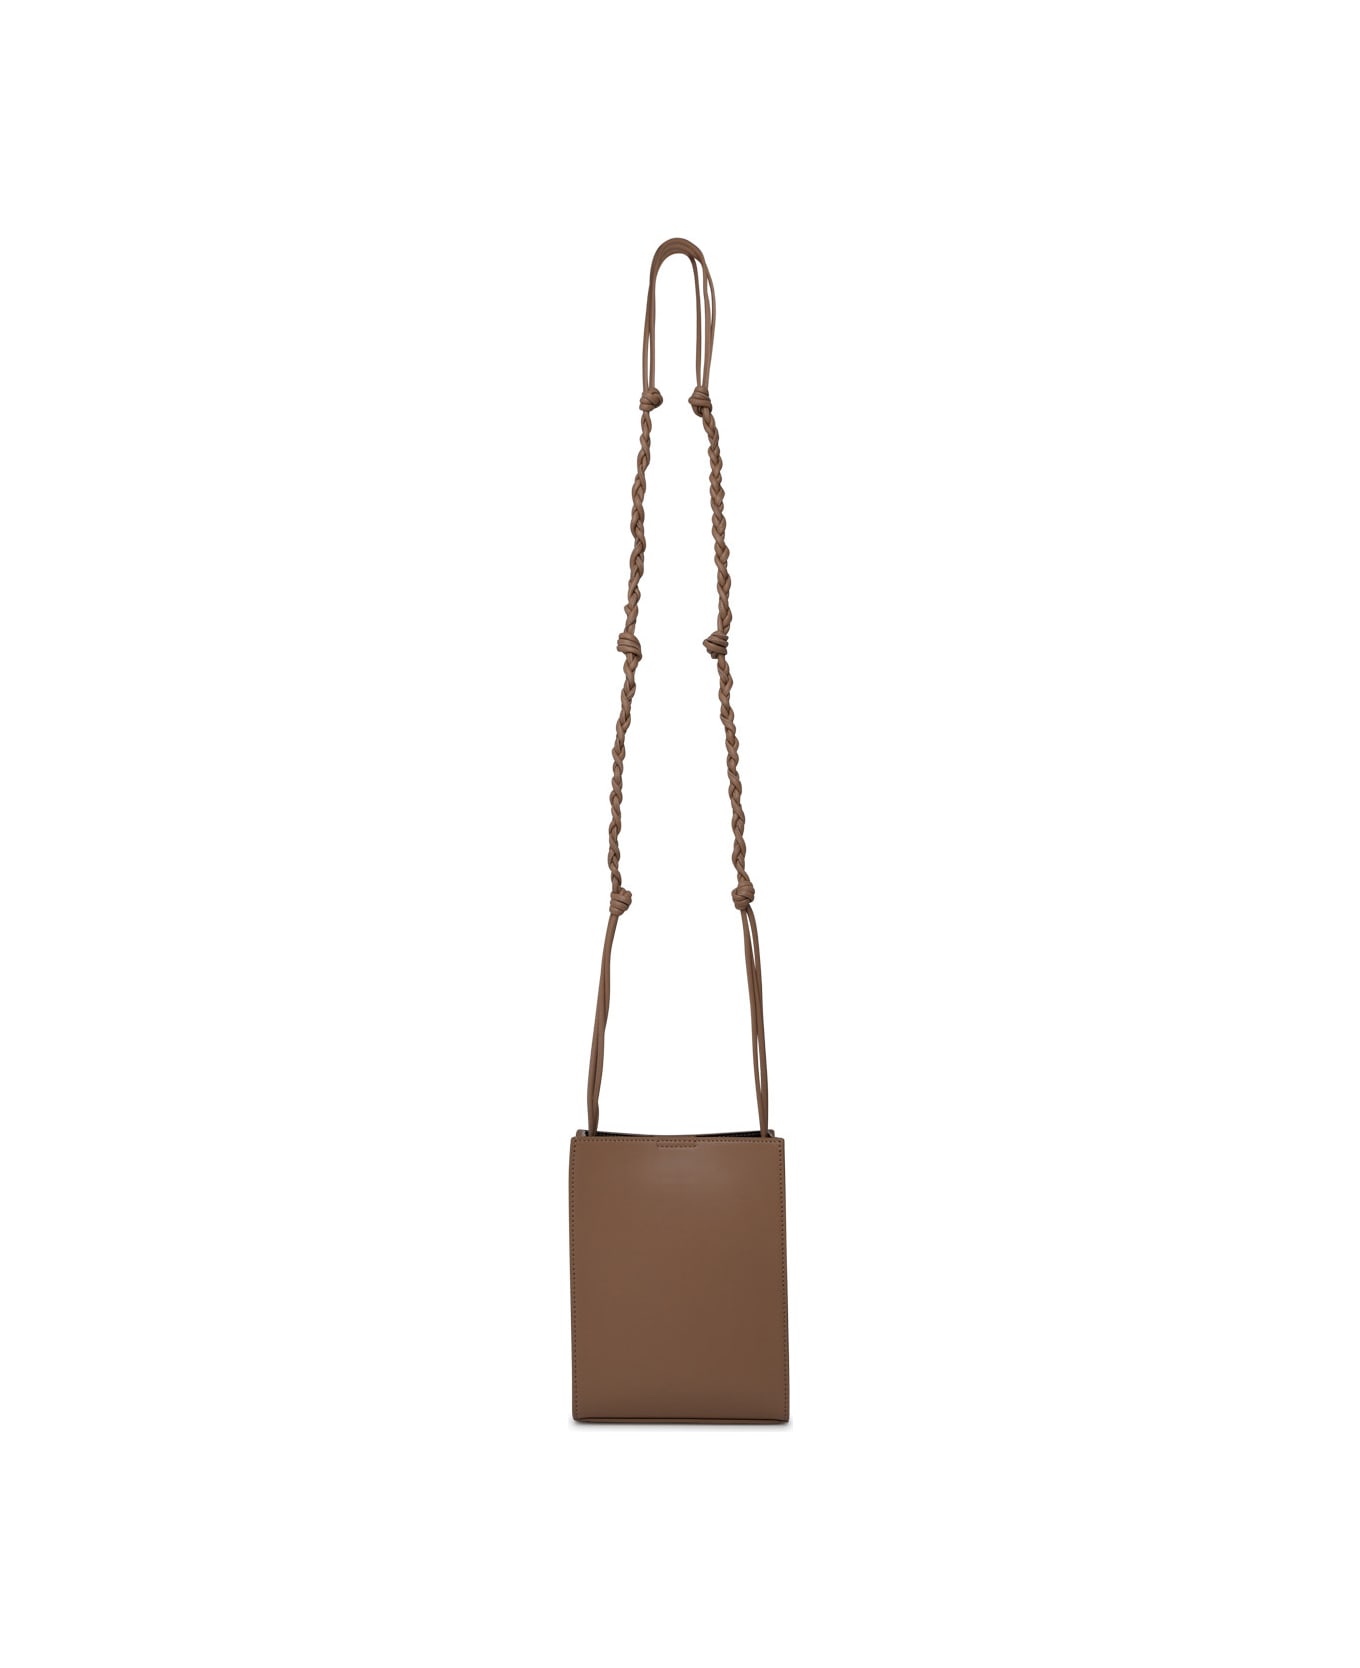 Jil Sander Tangle Bag In Beige Leather - Beige